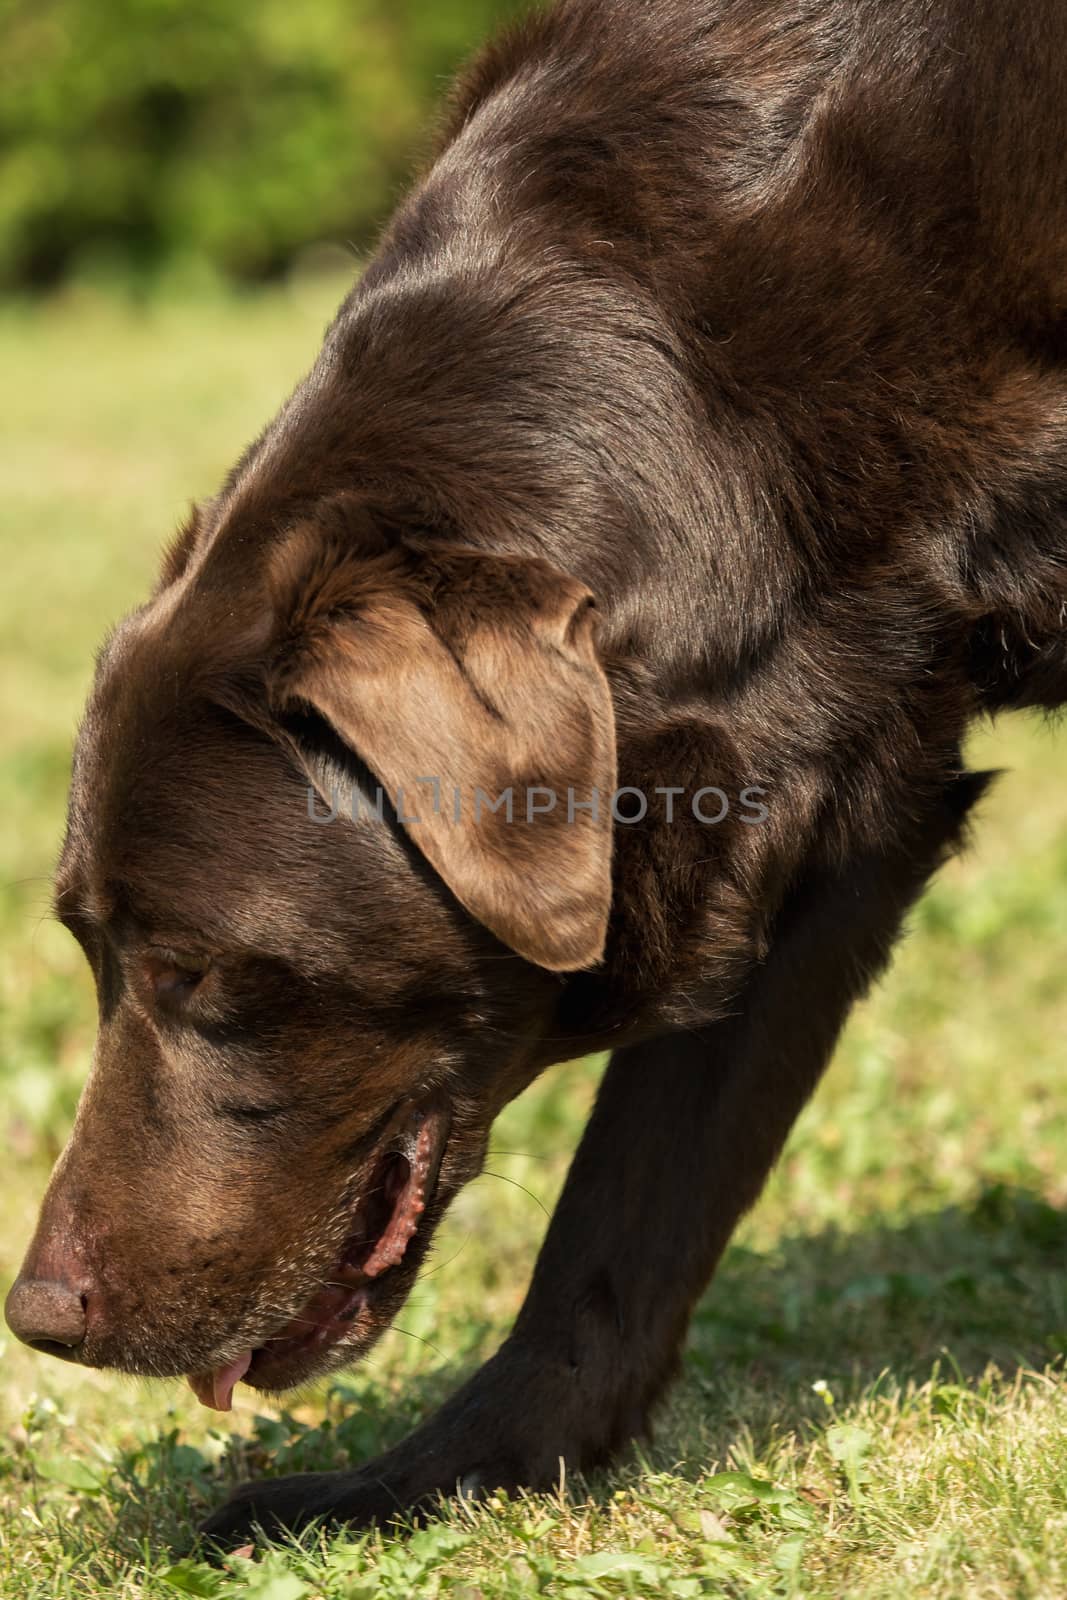 An old brown Labrador Retriever in the garden by sandra_fotodesign